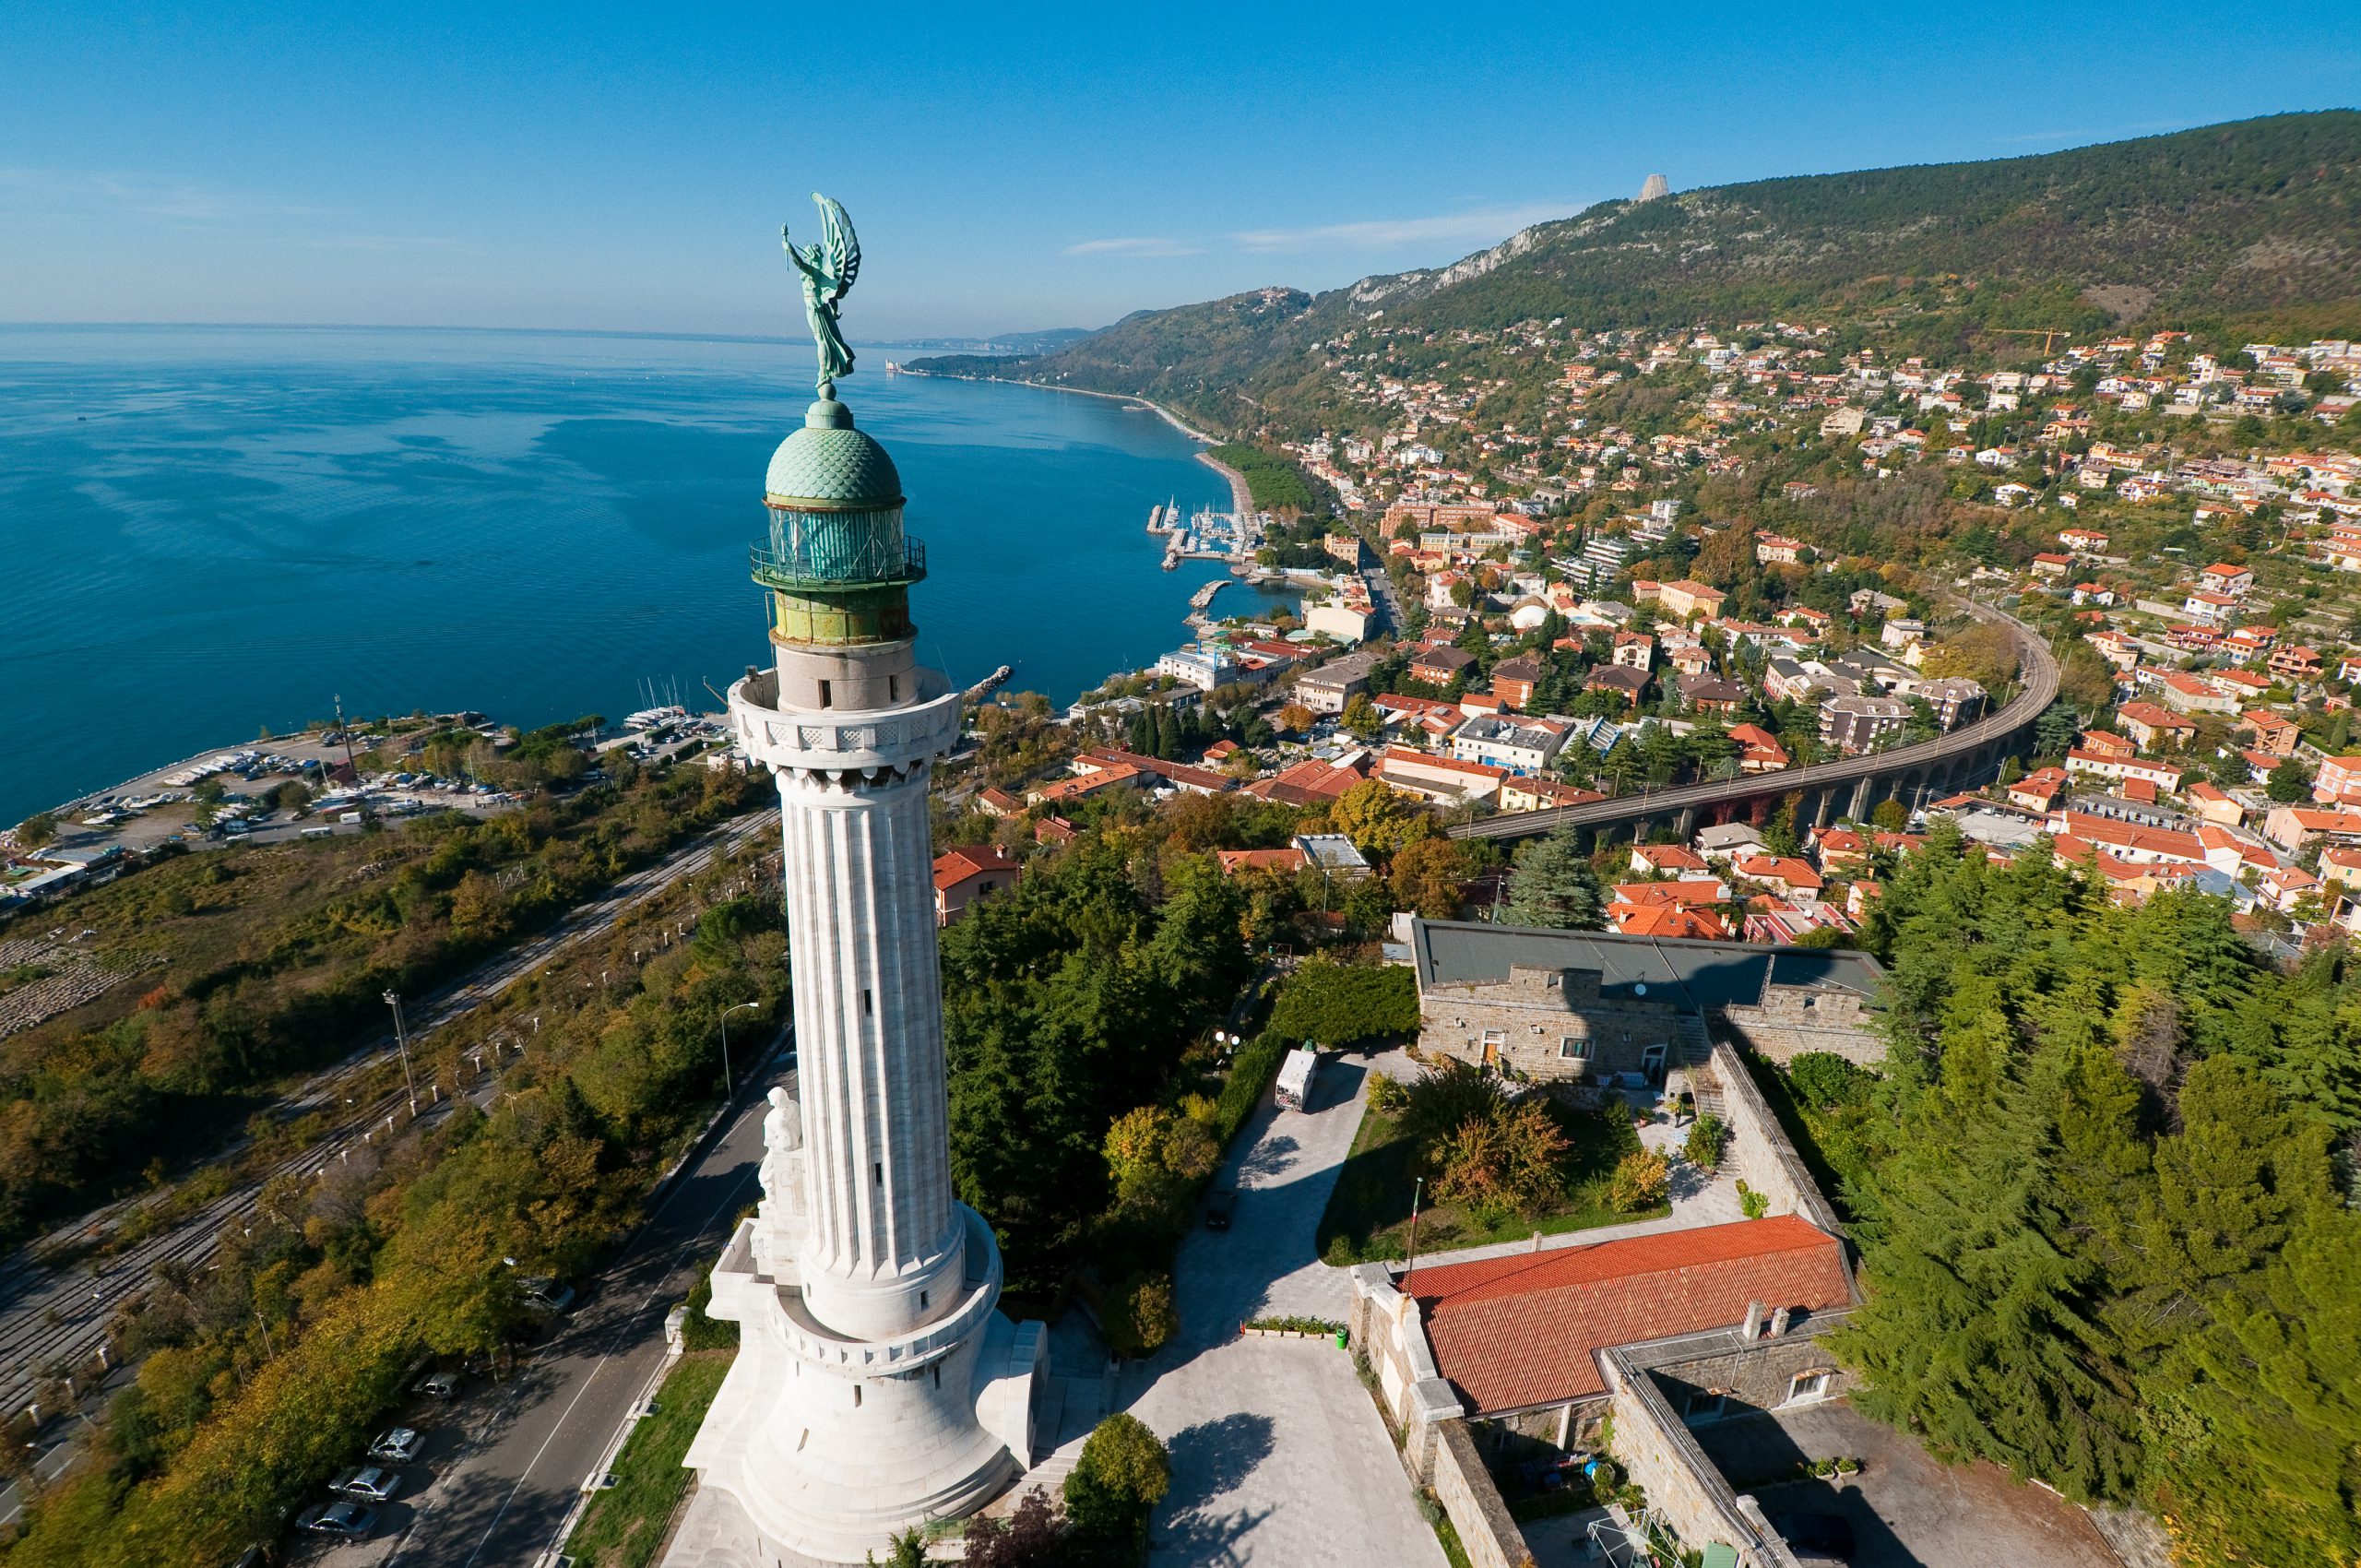 Bike tour to Trieste along the breathtakingly beautiful coastal area